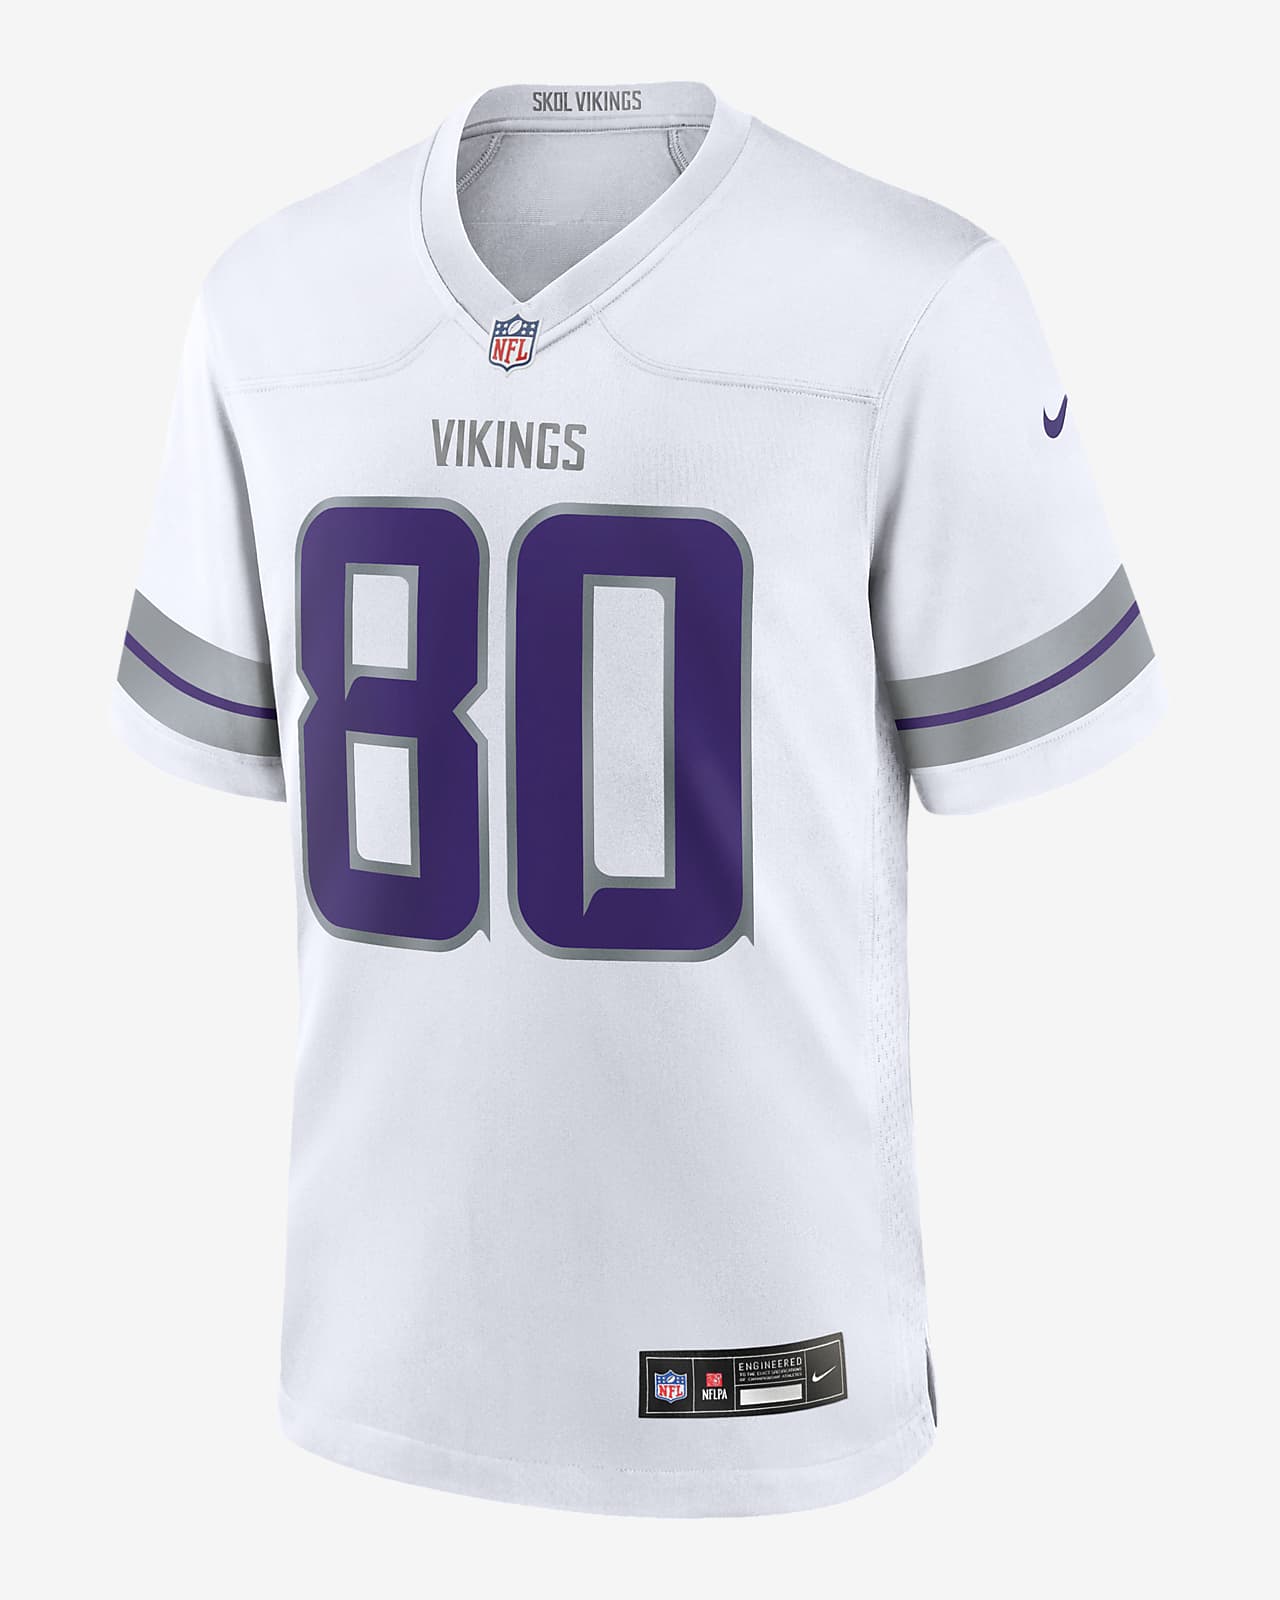 Jersey Nike de la NFL Game para hombre Cris Carter Minnesota Vikings